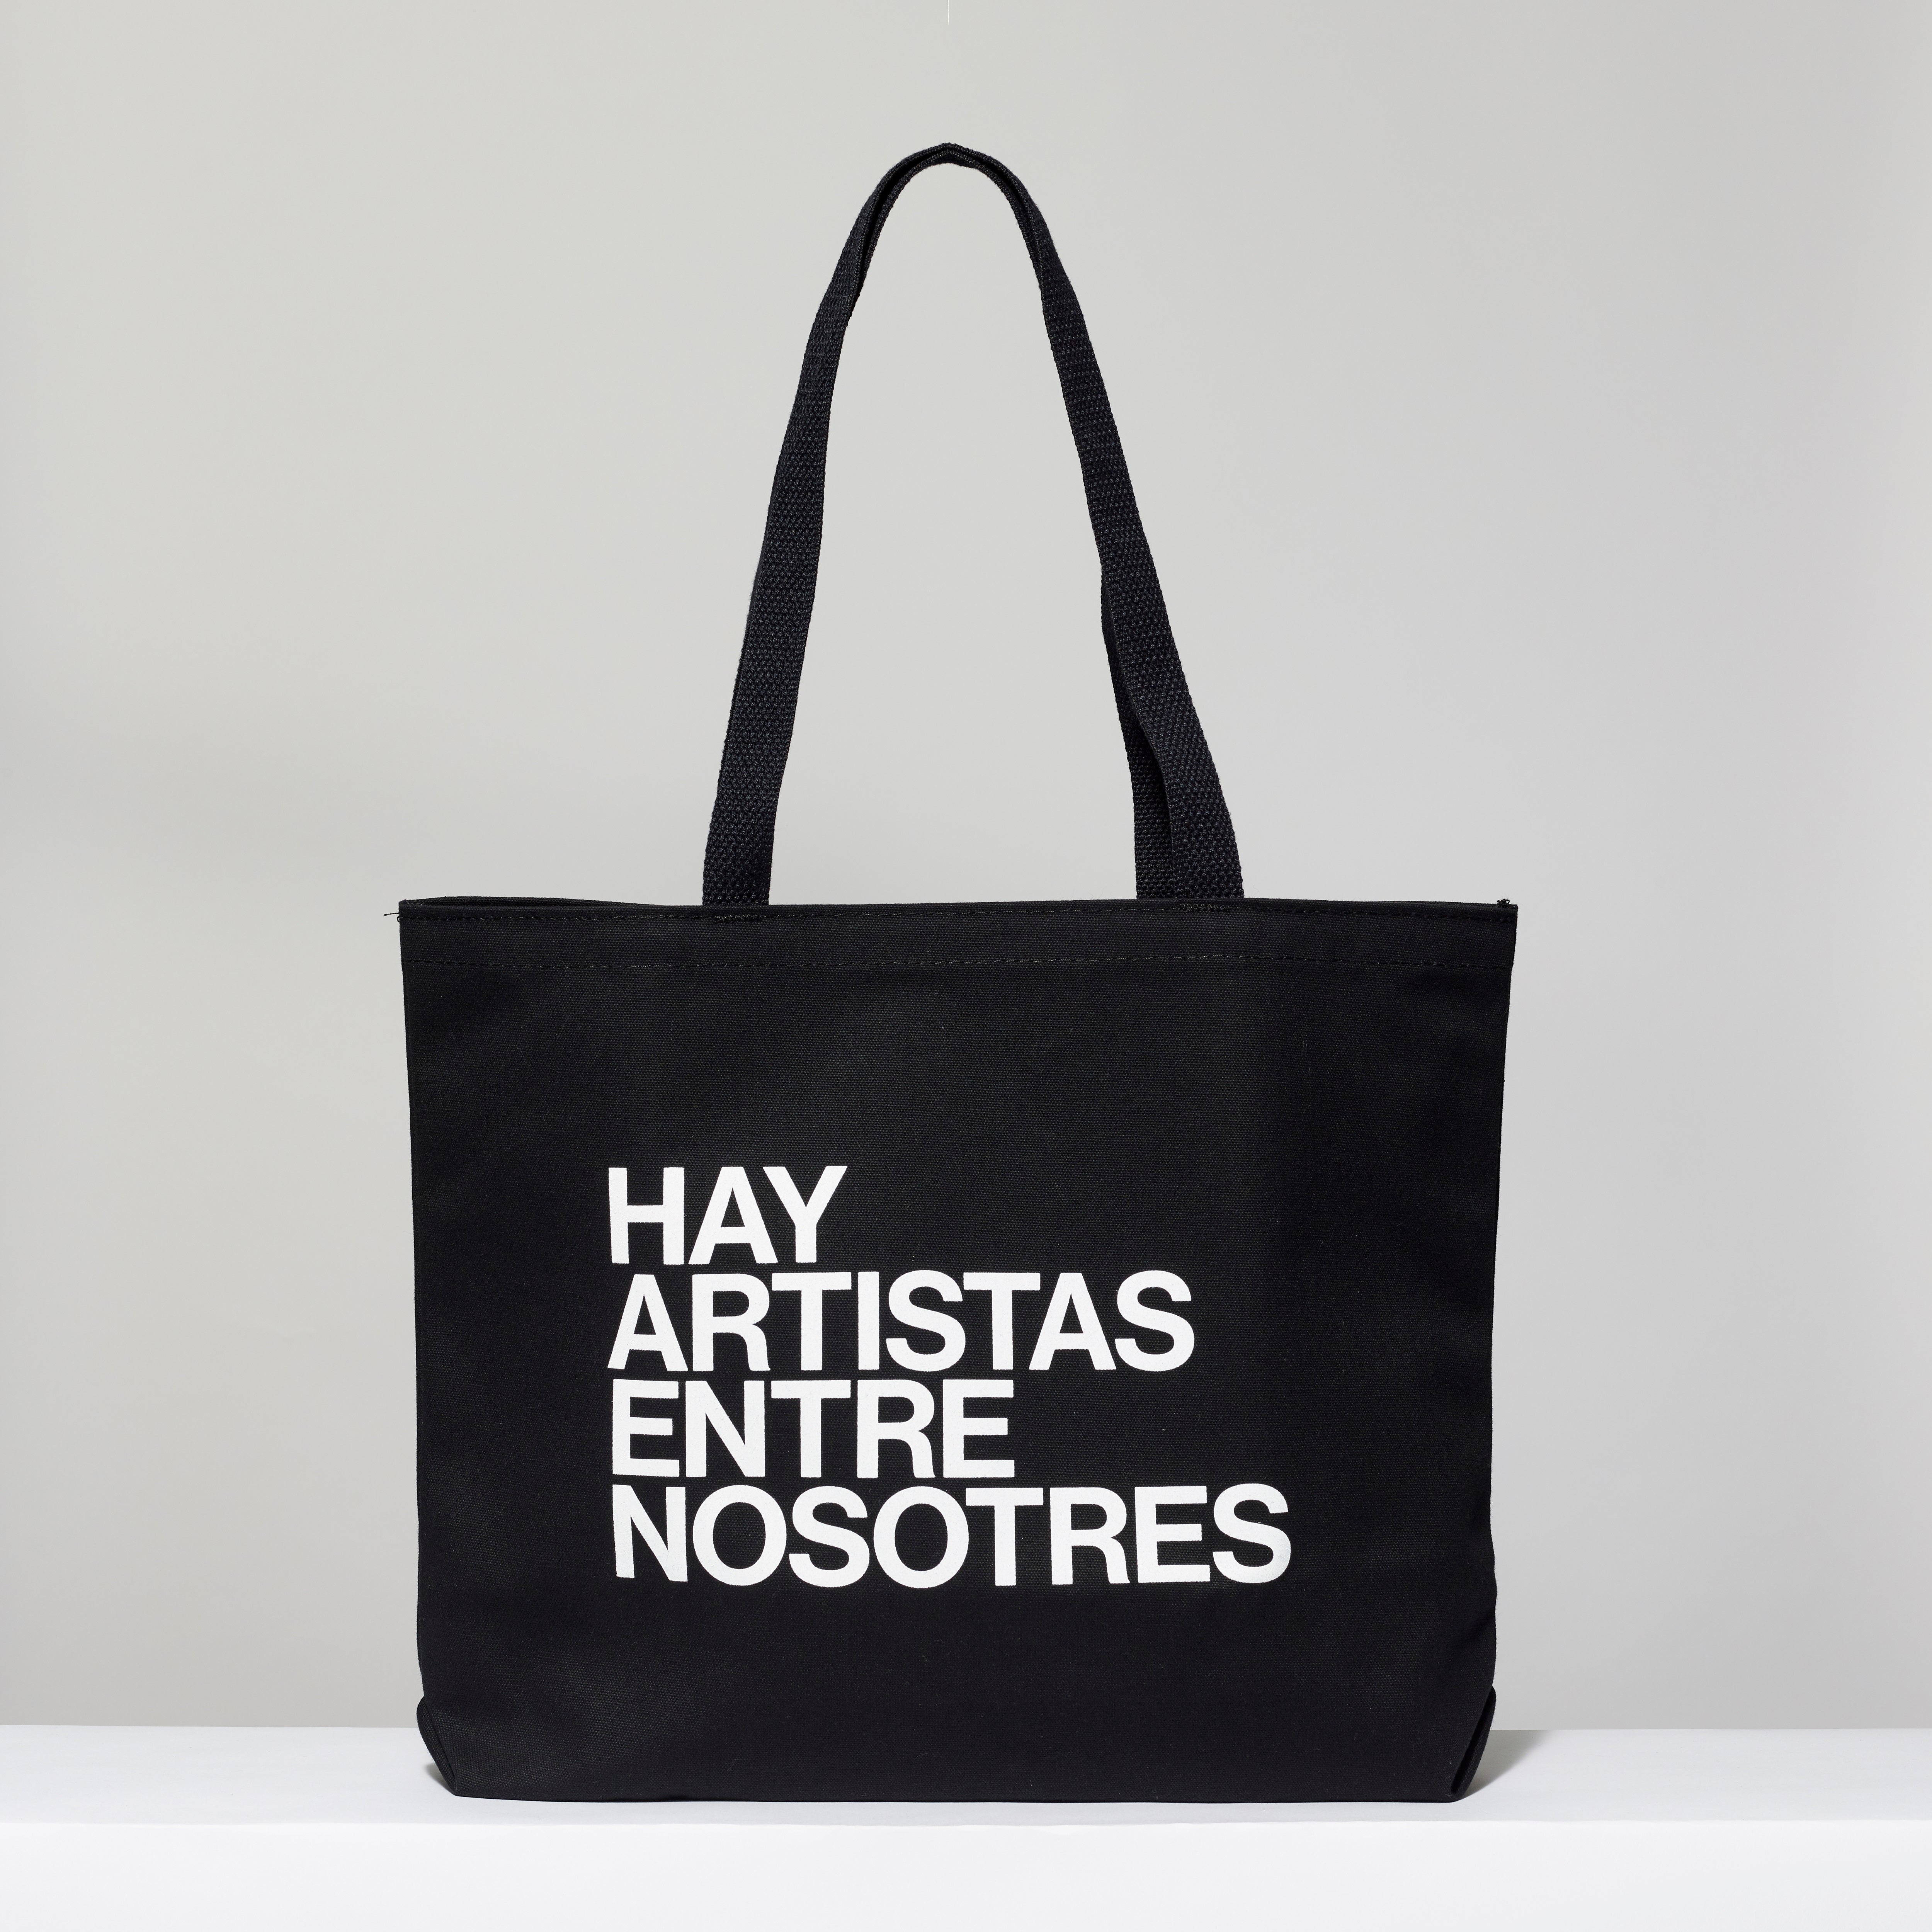 100% cotton black tote with Hay Artistas Entre Nosotres text in white. Measures 18" x 14". 3.5" gusset, 11" handles.